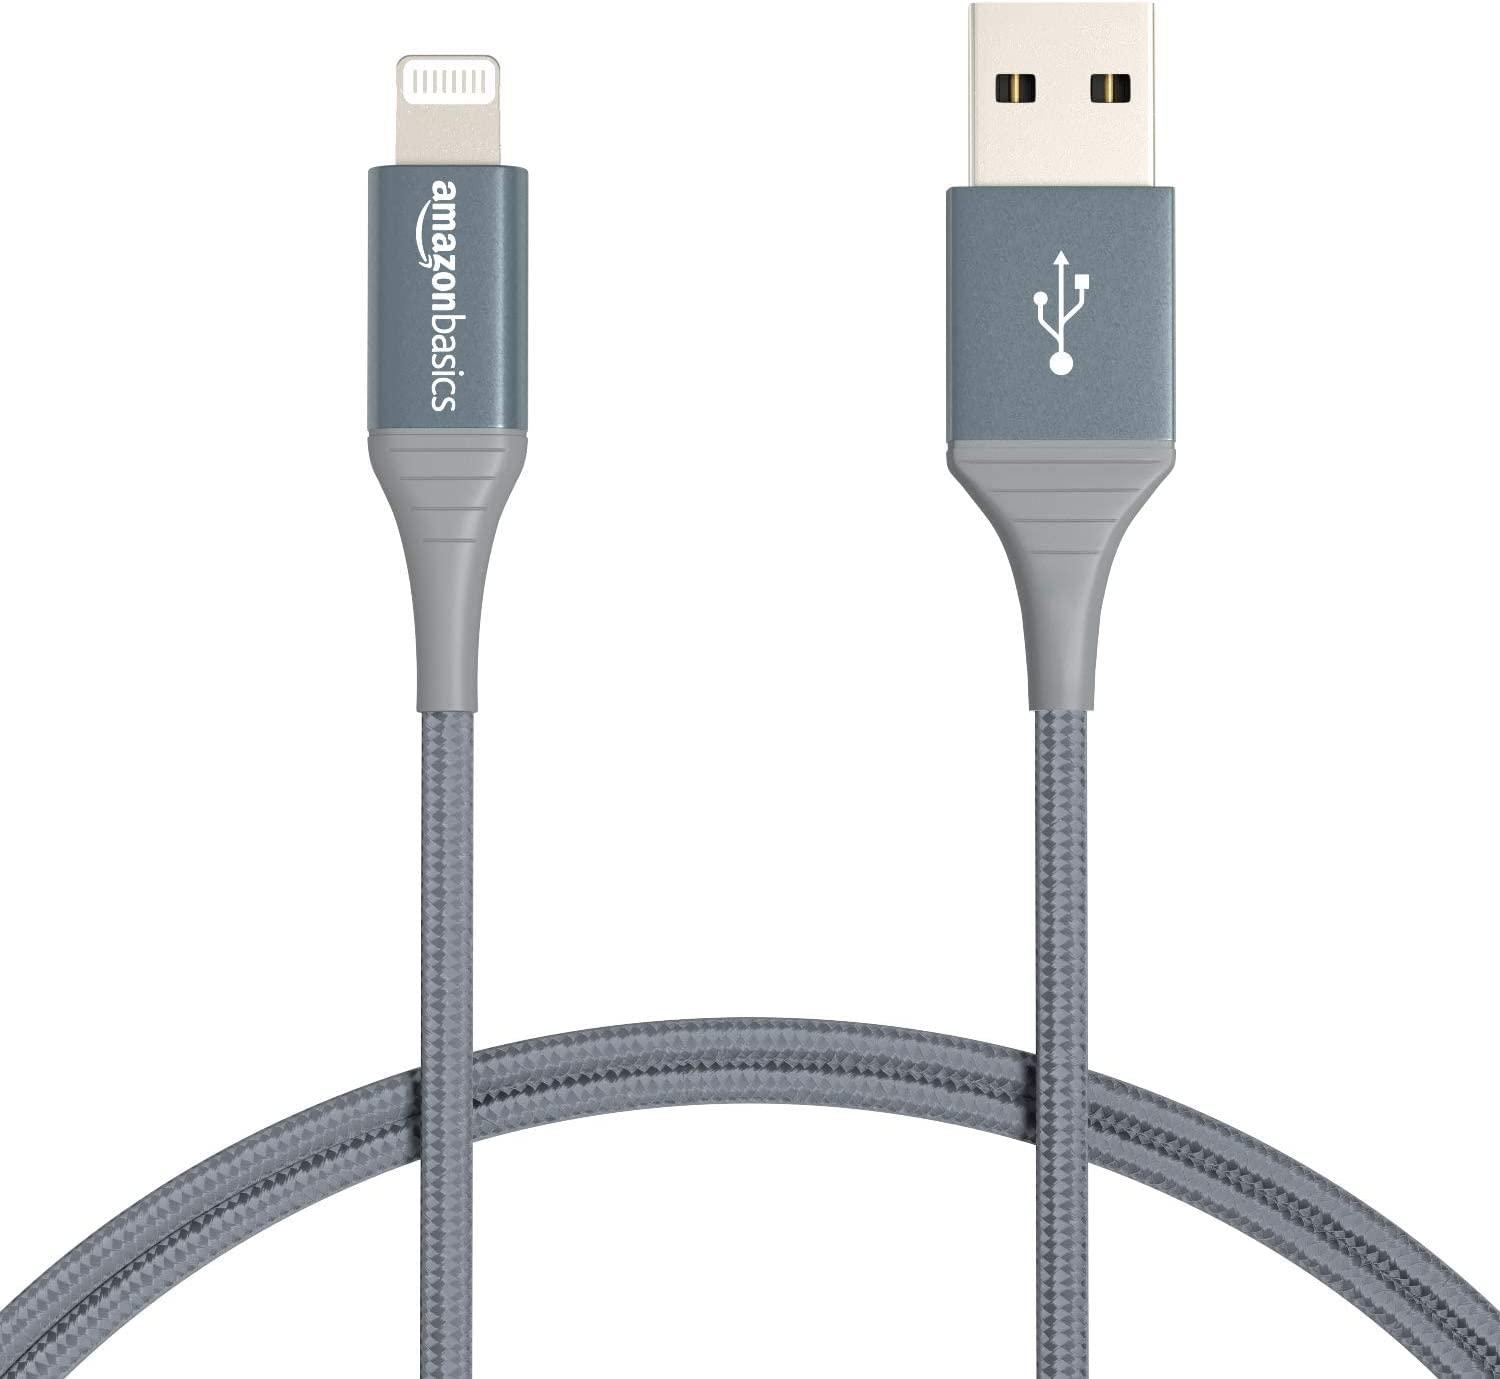 Apple iPhone iPad AmazonBasics Premium Lightning USB Cables 12 Pack for $24.99